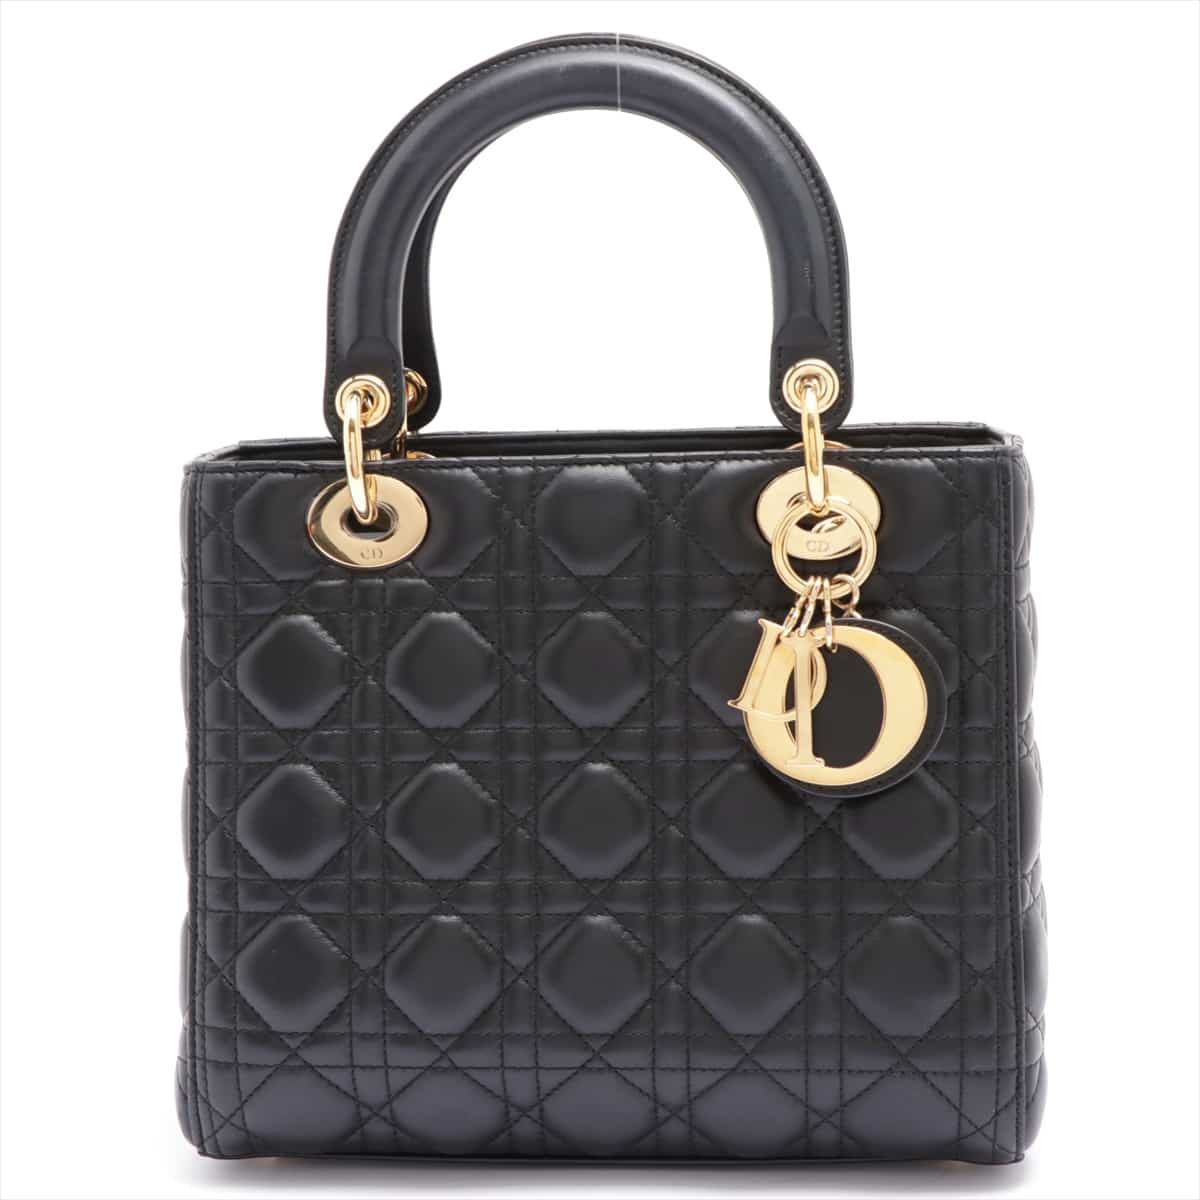 Christian Dior Lady Dior Cannage Leather 2way shoulder bag Black